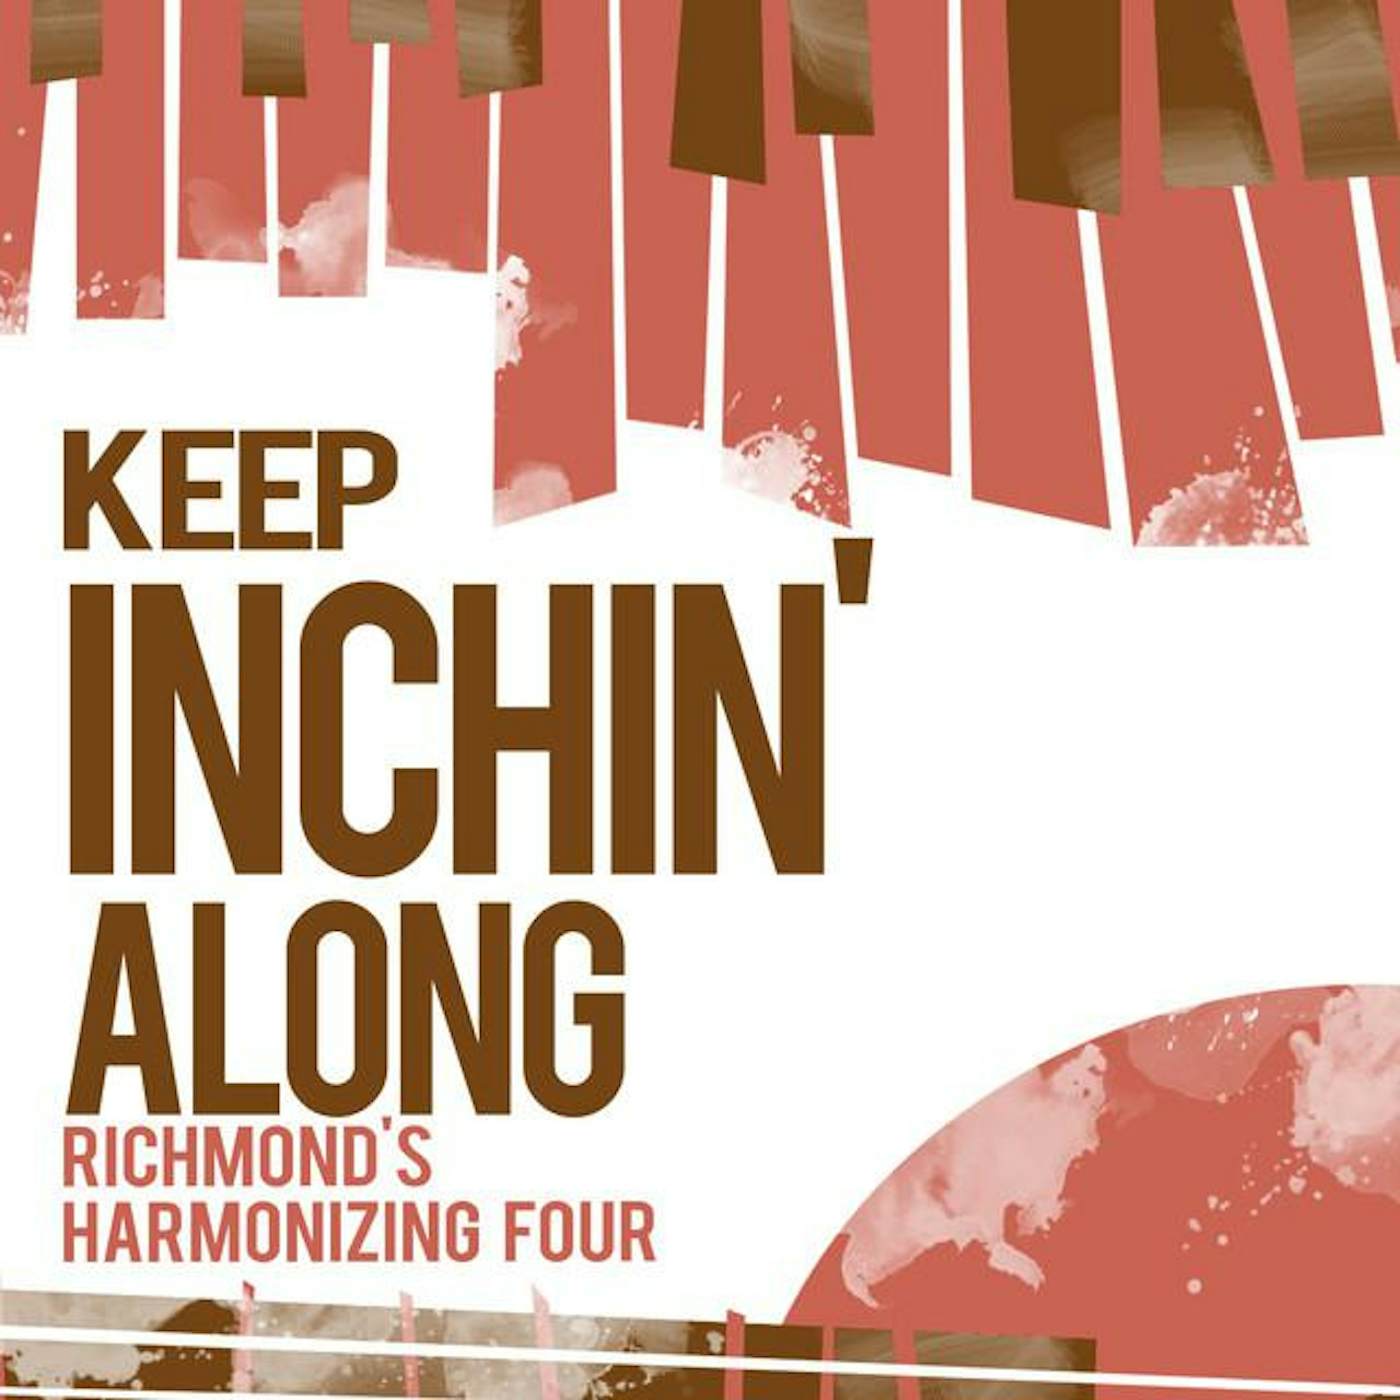 Richmond's Harmonizing Four